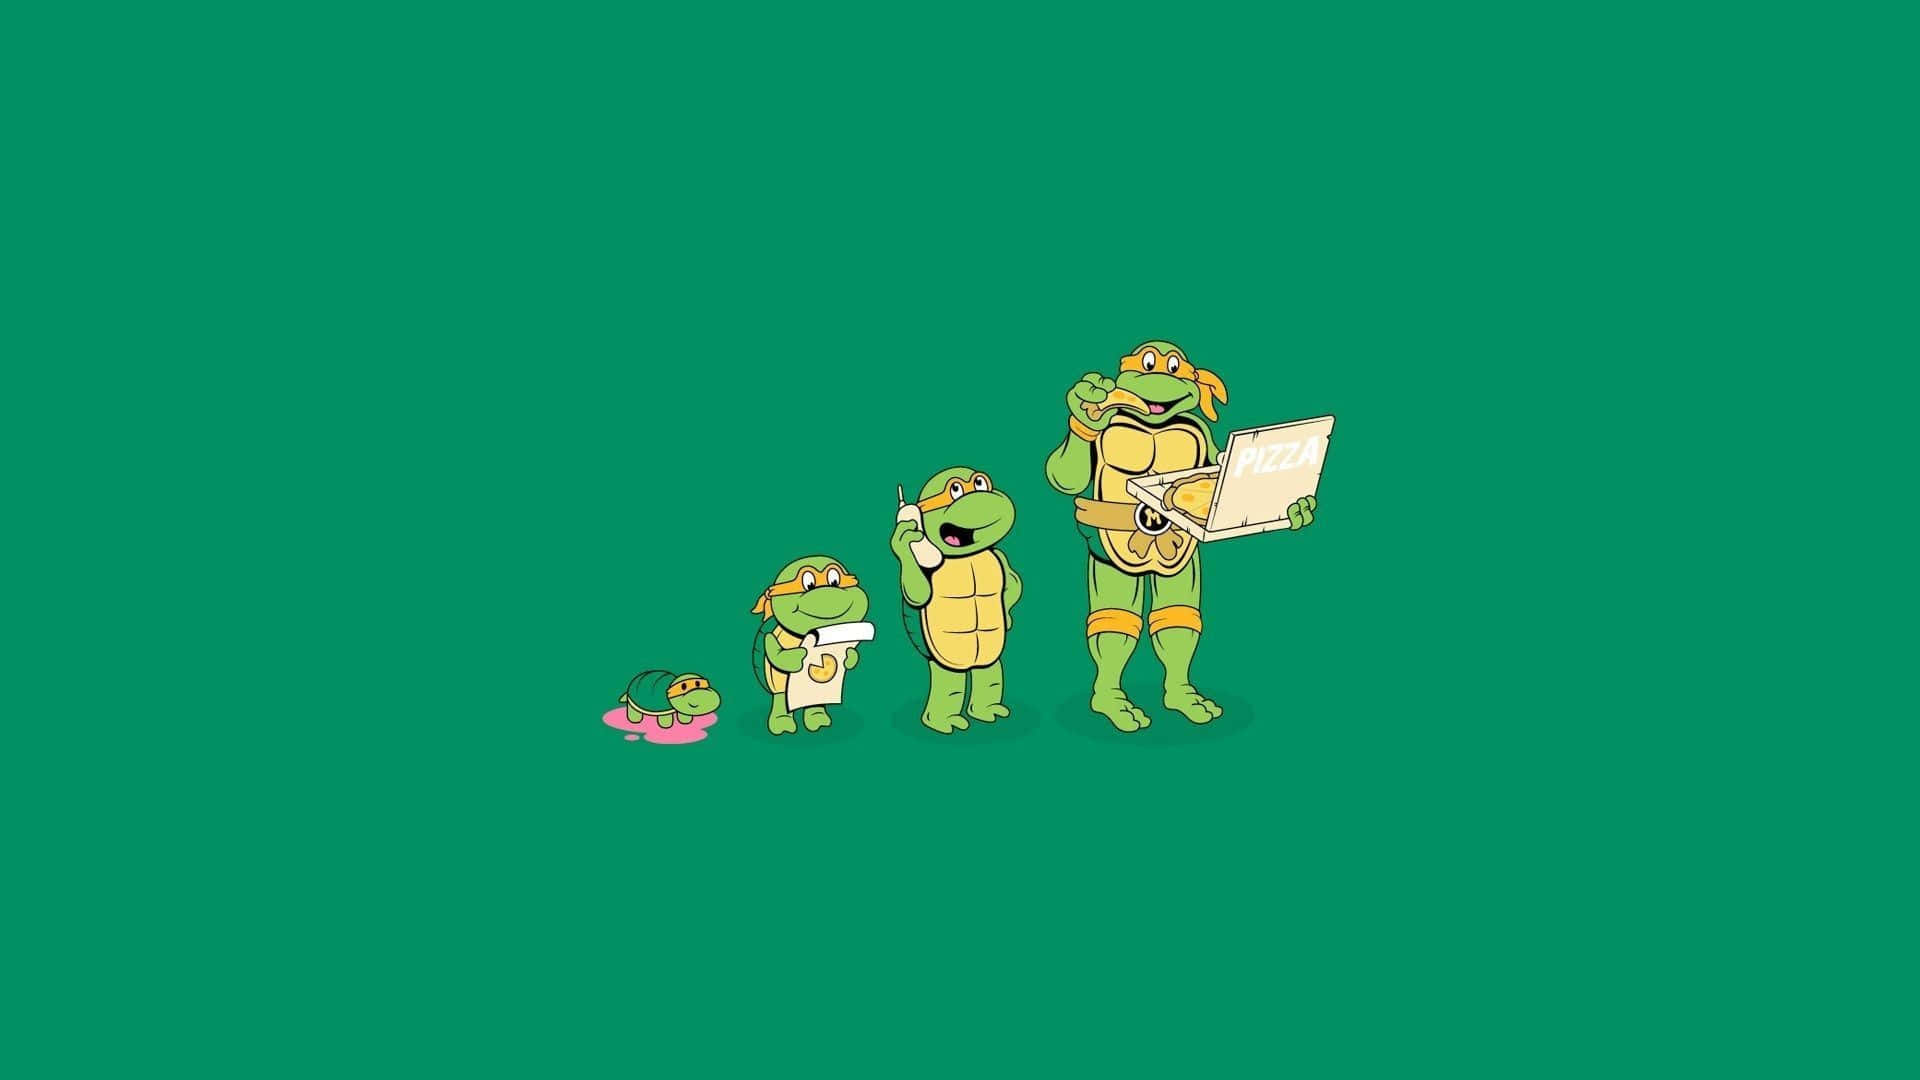 Caption: The Teenage Mutant Ninja Turtles In Action